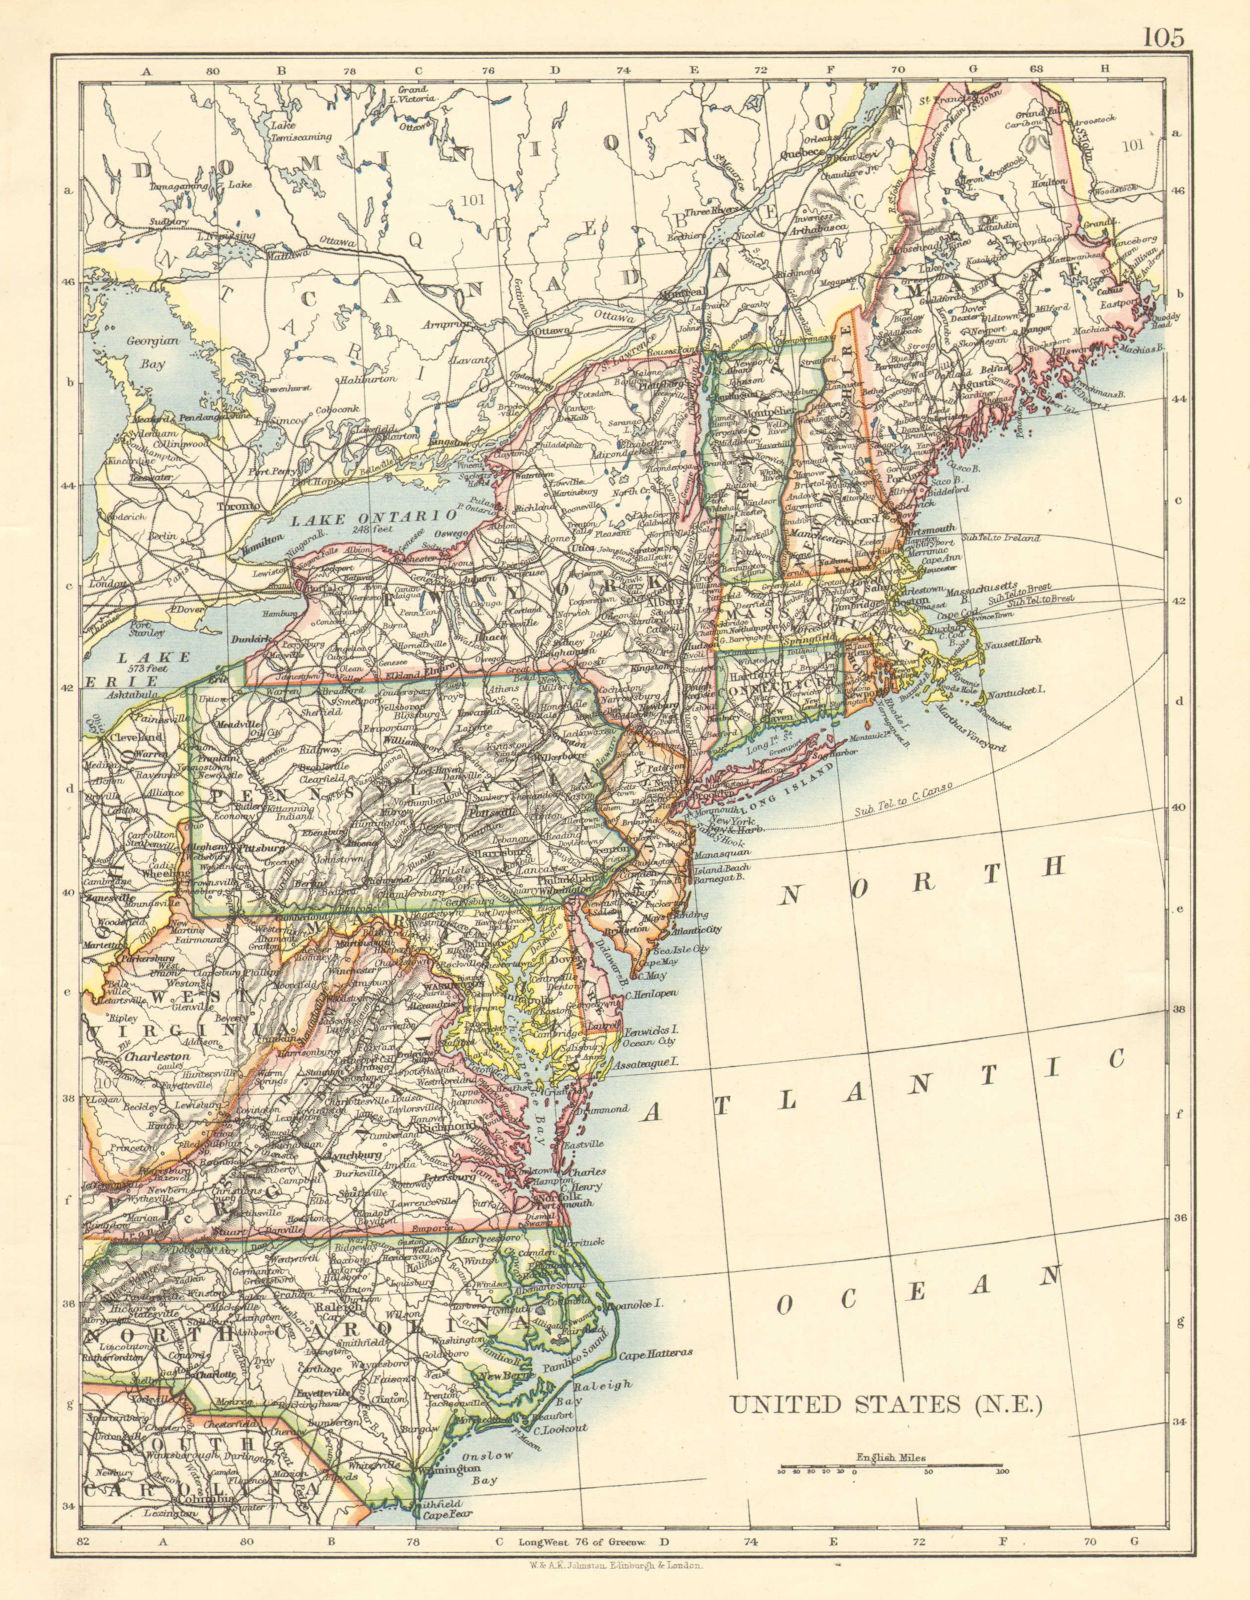 UNITED STATES NORTH EAST. New England Appalachia Atlantic states. USA 1899 map